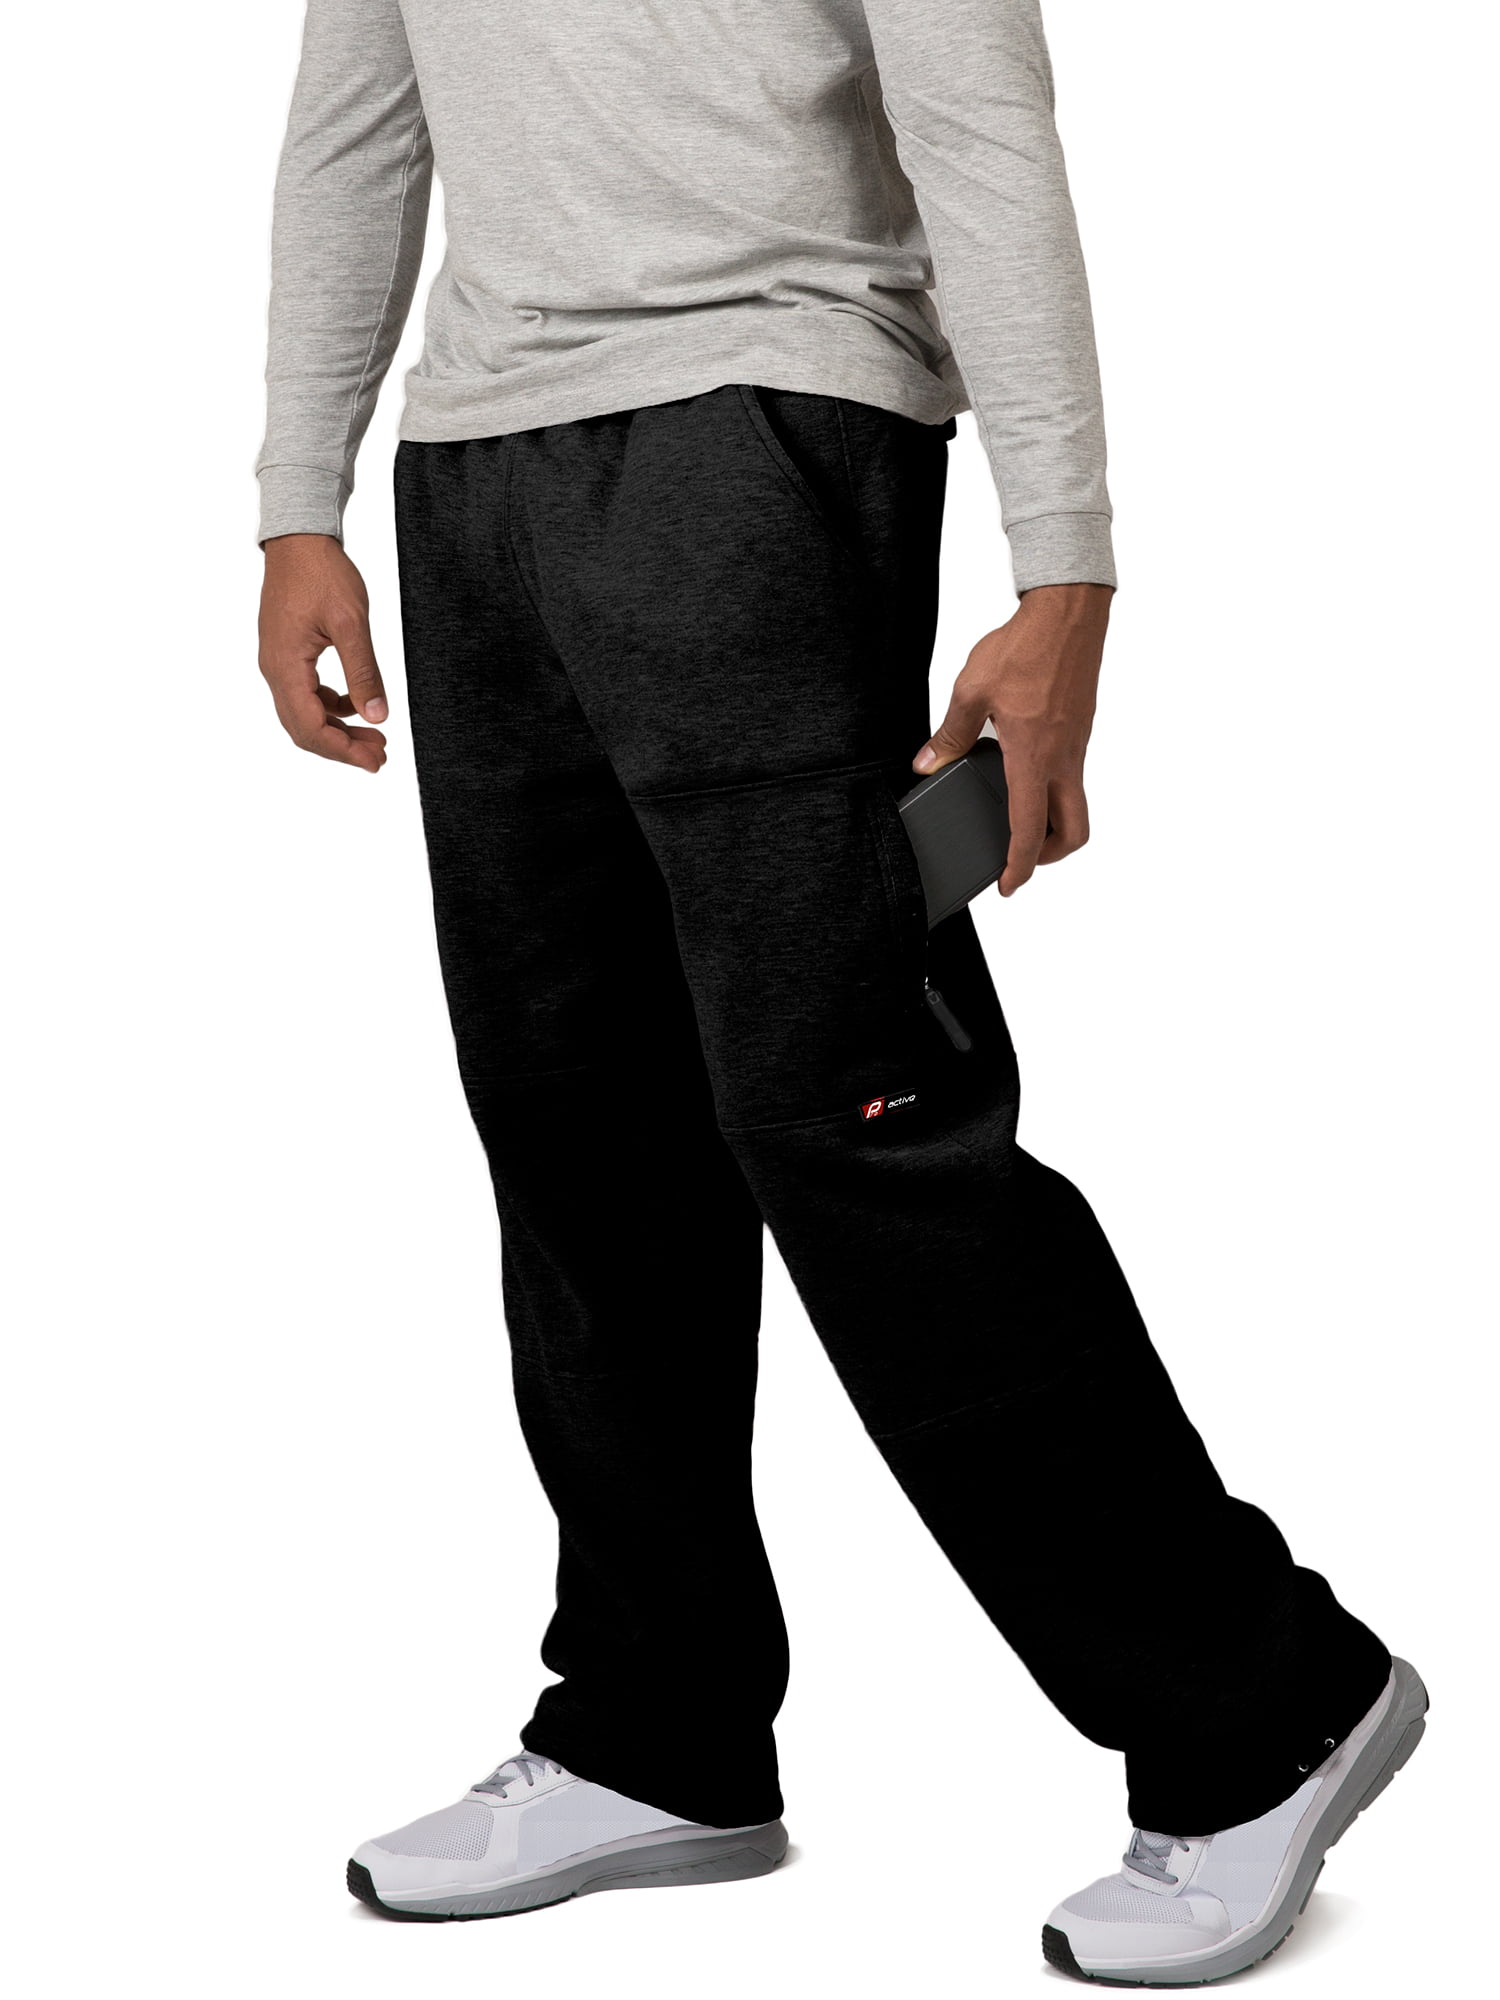 SEVEGO Lightweight Men's Sweatpants 30/32/34 Tall Inseam Cotton Soft Jogger with Zipper Pockets Plus Size Cargo Pants 